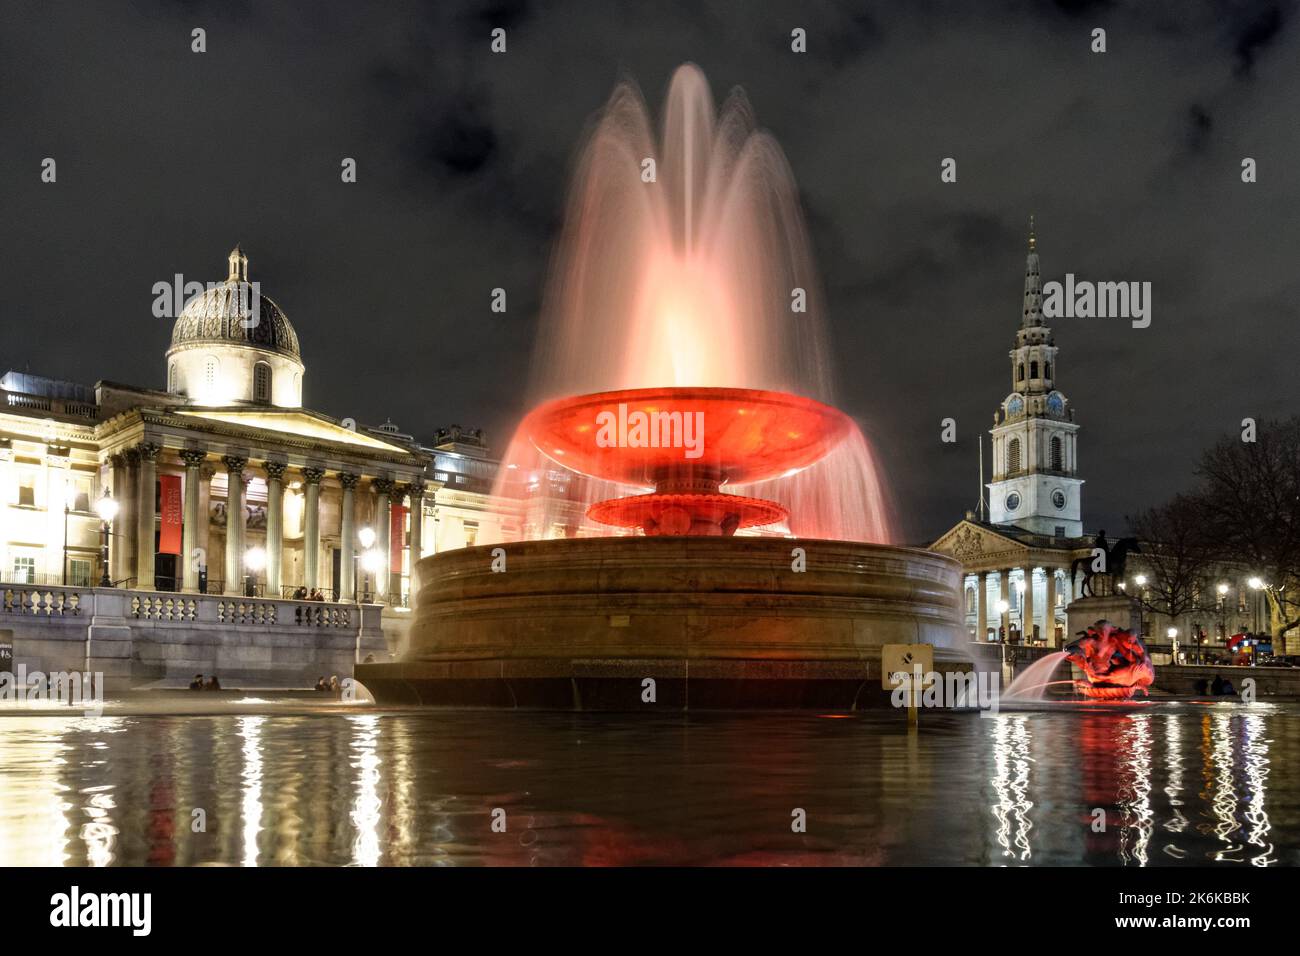 Illuminated fountain at Trafalgar Square at night, London England United Kingdom UK Stock Photo